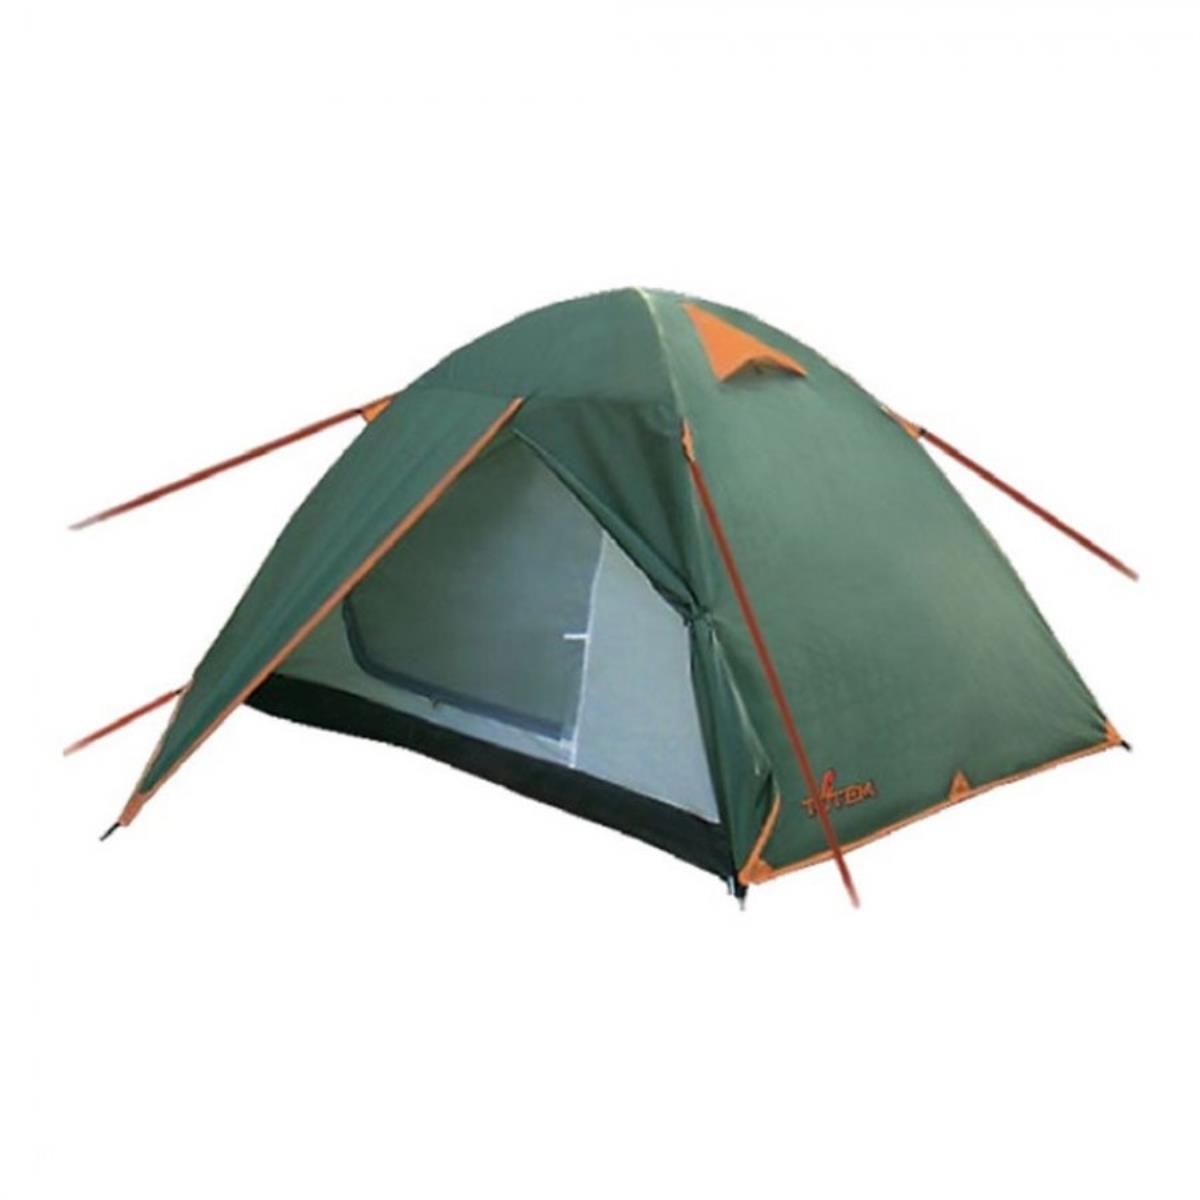 Треккинговая палатка Tepee 3 V2 (TTT-026) Totem палатка bluebird 2 v2 зеленый ttt 015 totem